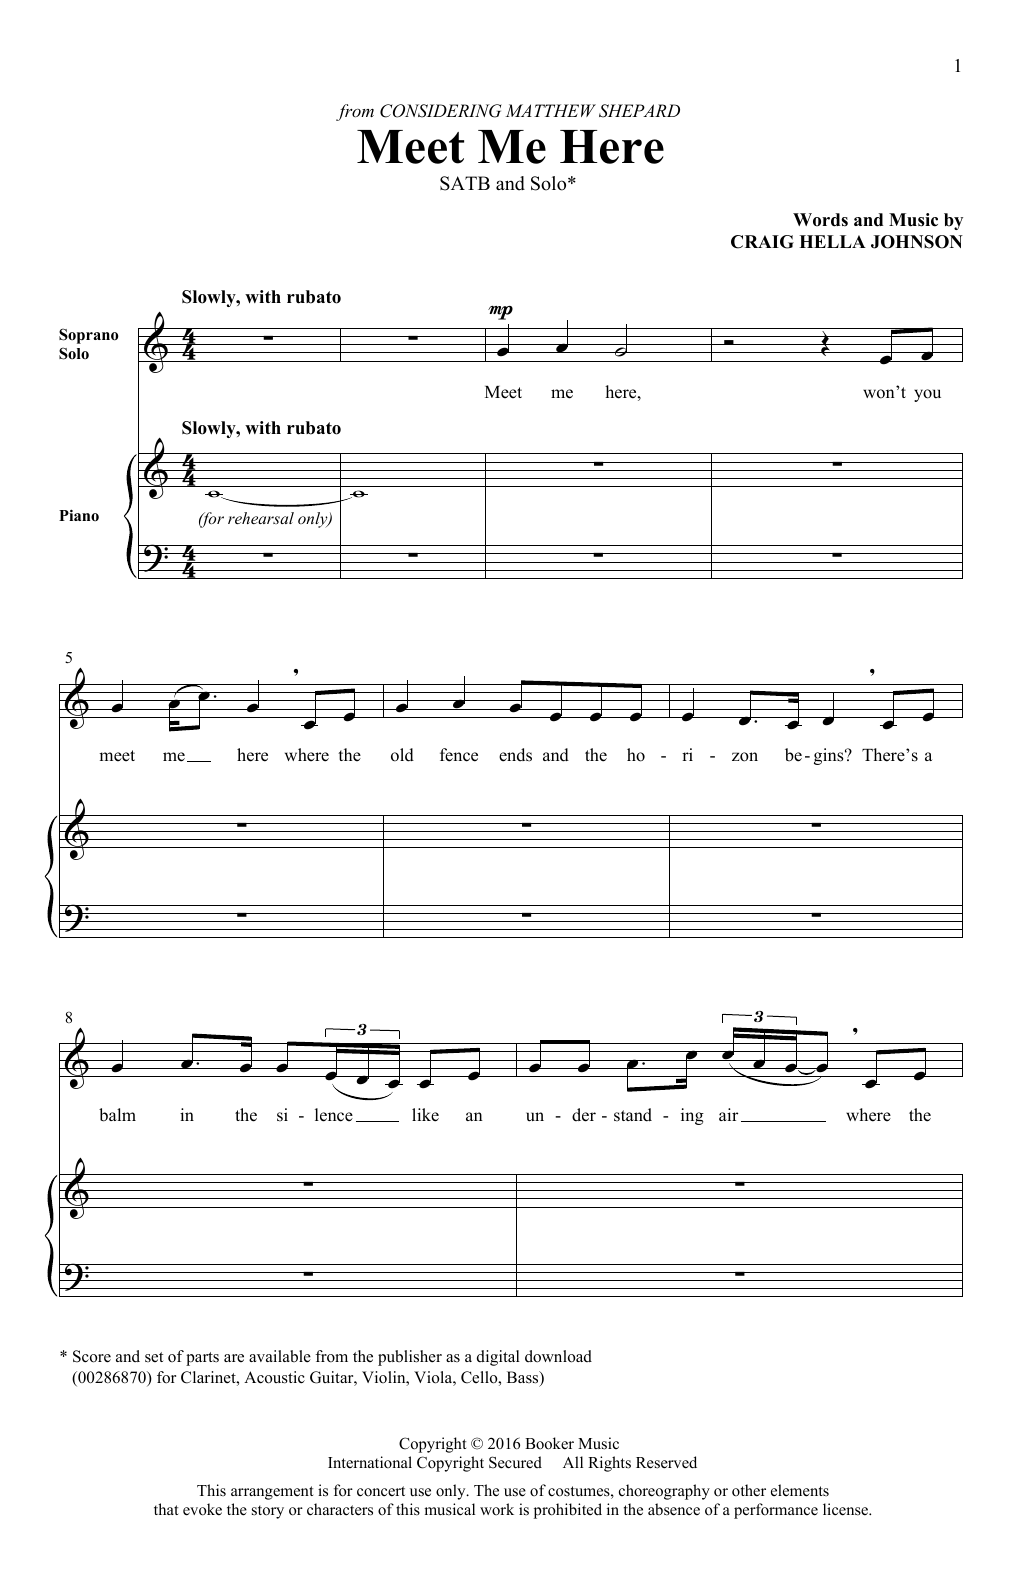 Craig Hella Johnson Meet Me Here (from Considering Matthew Shepard) Sheet Music Notes & Chords for SATB Choir - Download or Print PDF